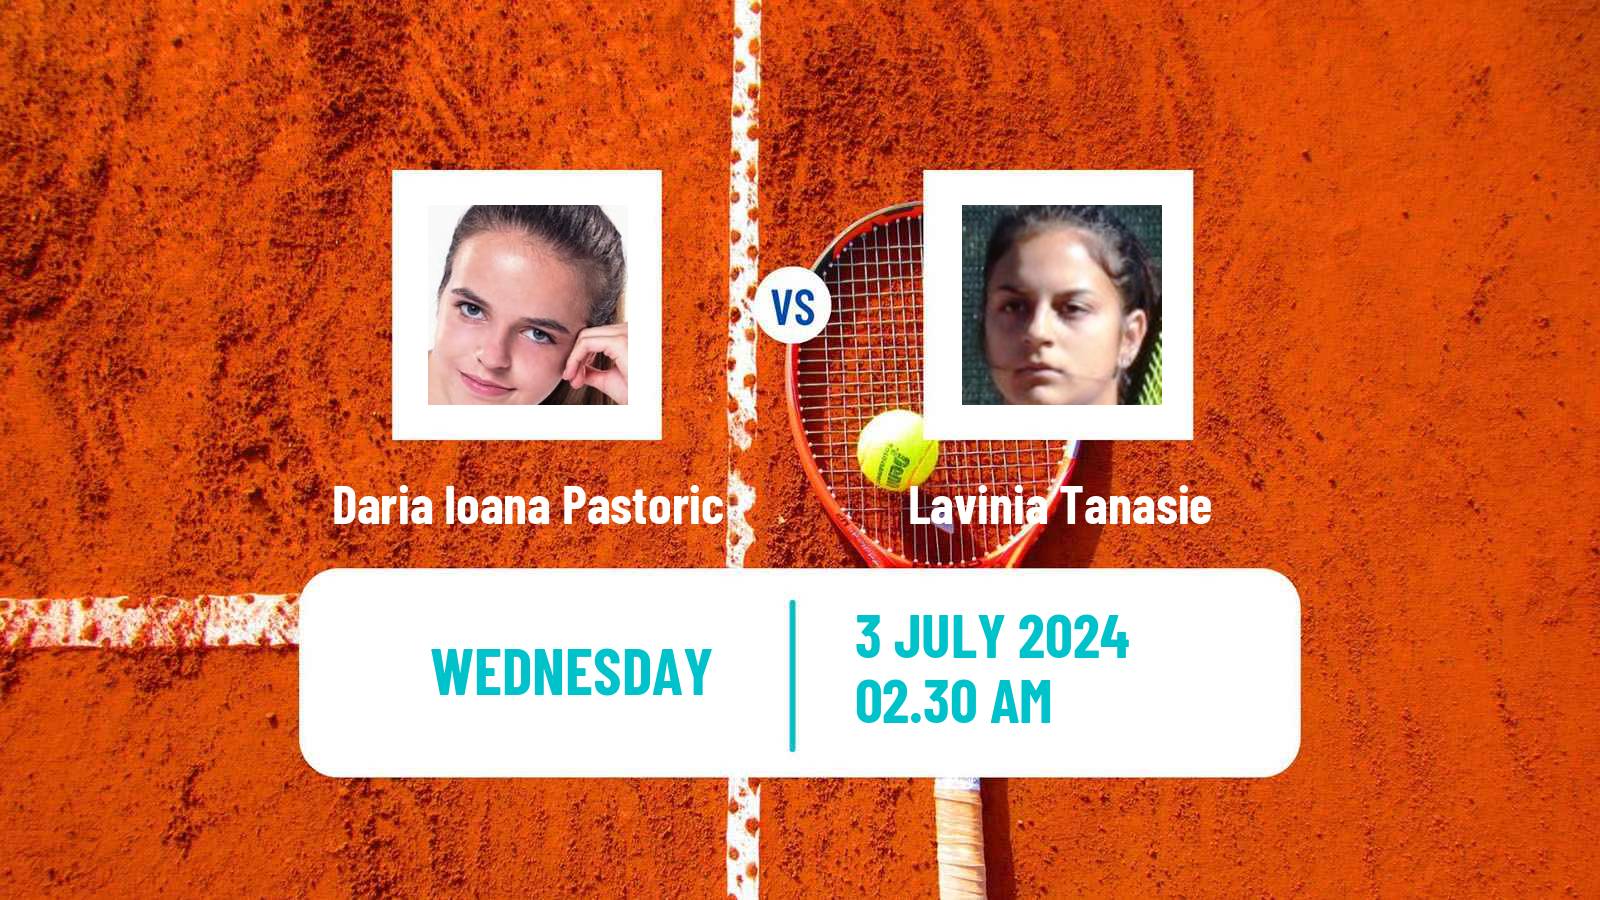 Tennis ITF W15 Galati 2 Women Daria Ioana Pastoric - Lavinia Tanasie